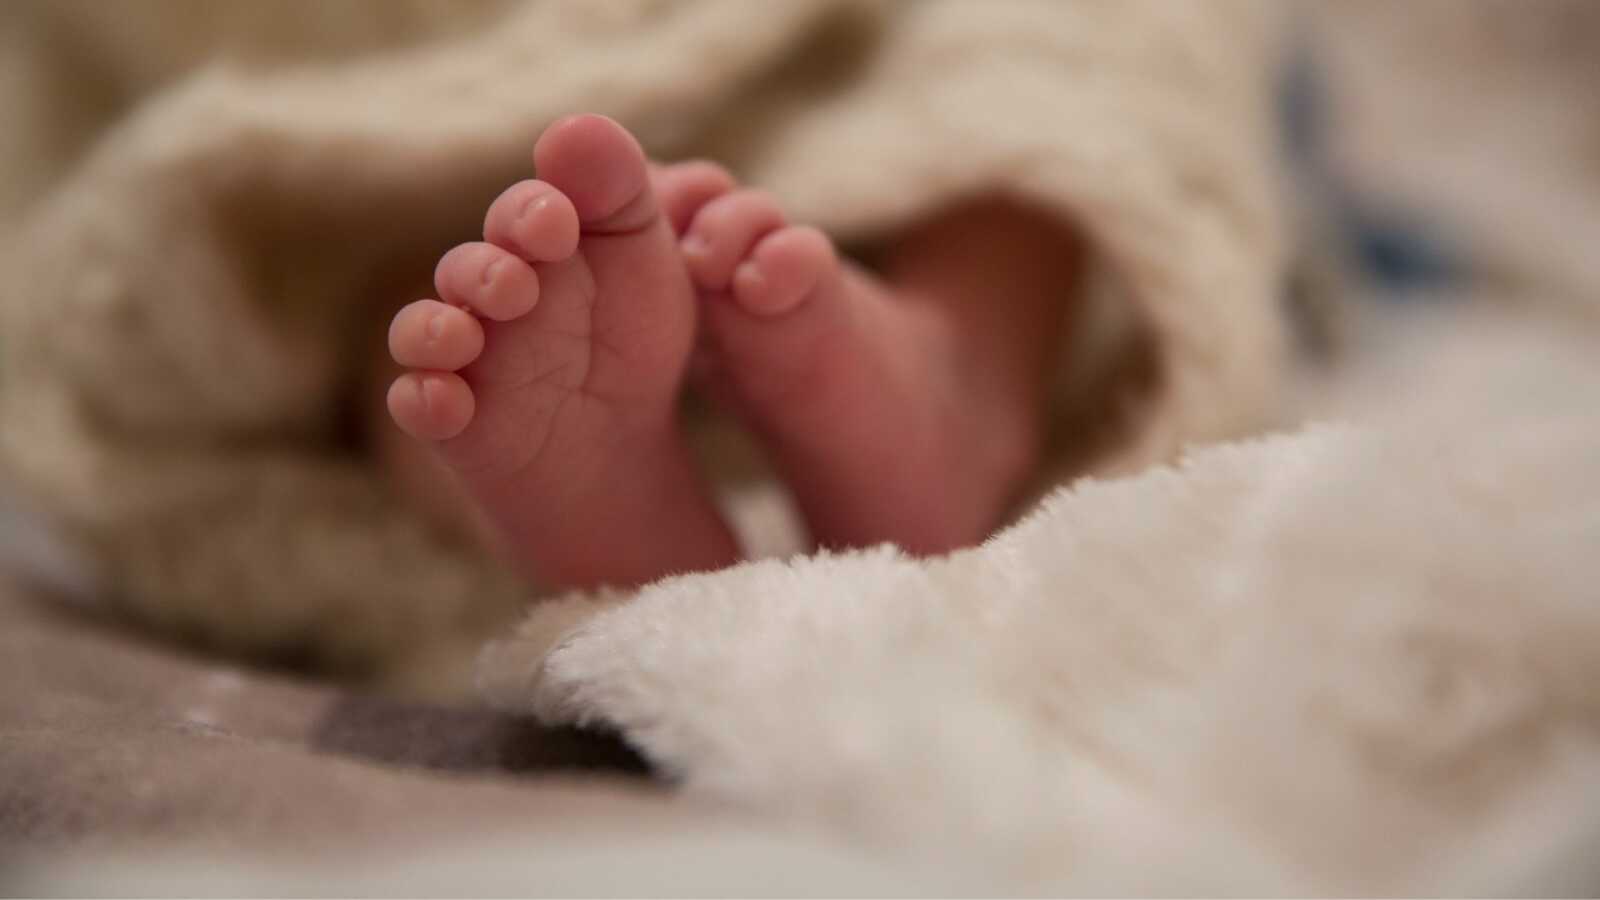 Newborn baby swaddled in blanket